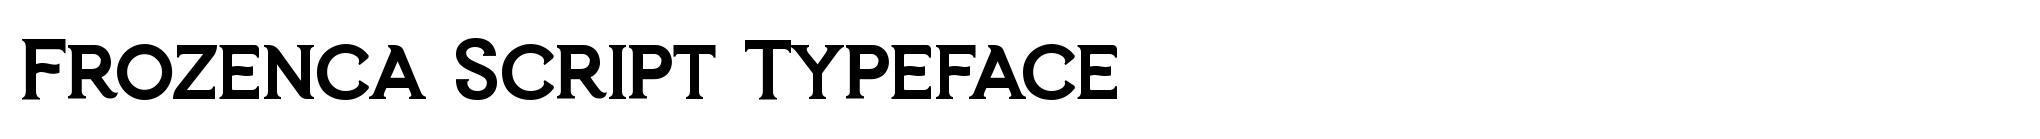 Frozenca Script Typeface image